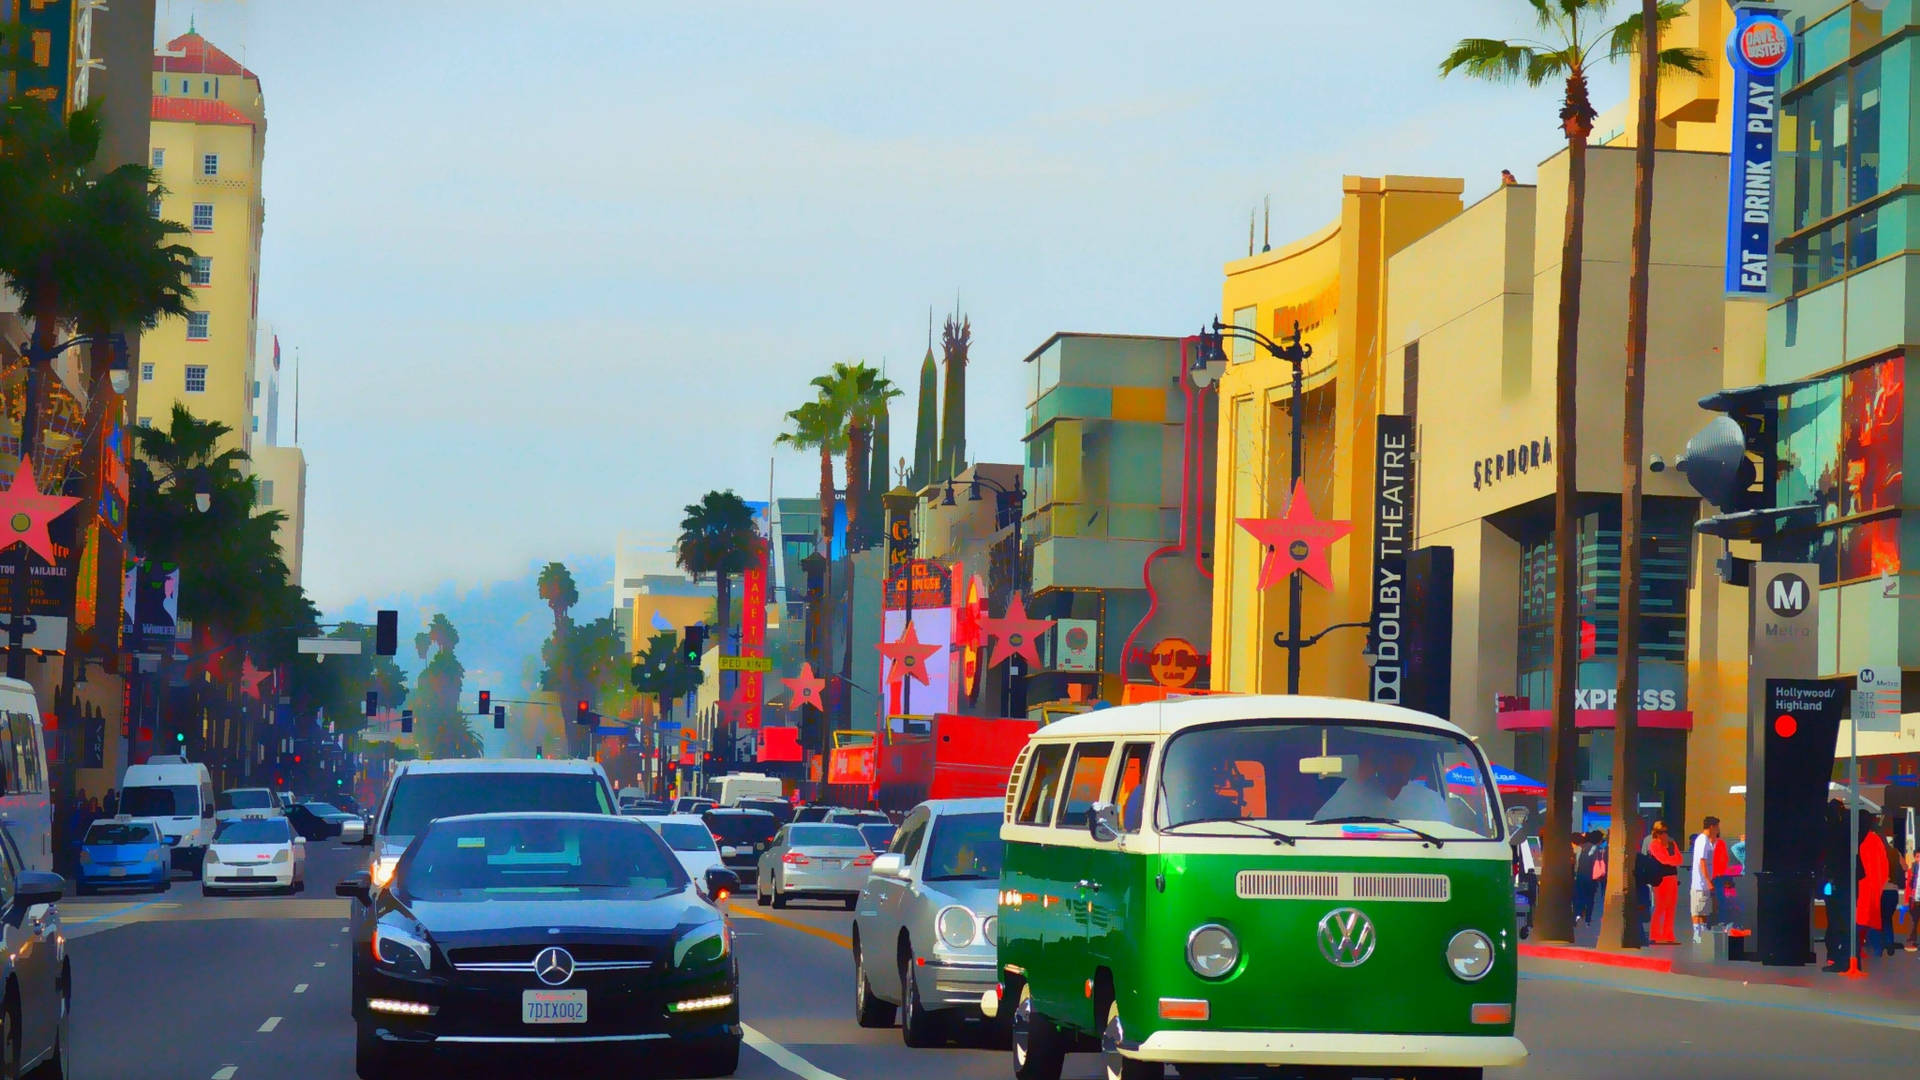 Hollywood Street Digital Art Background